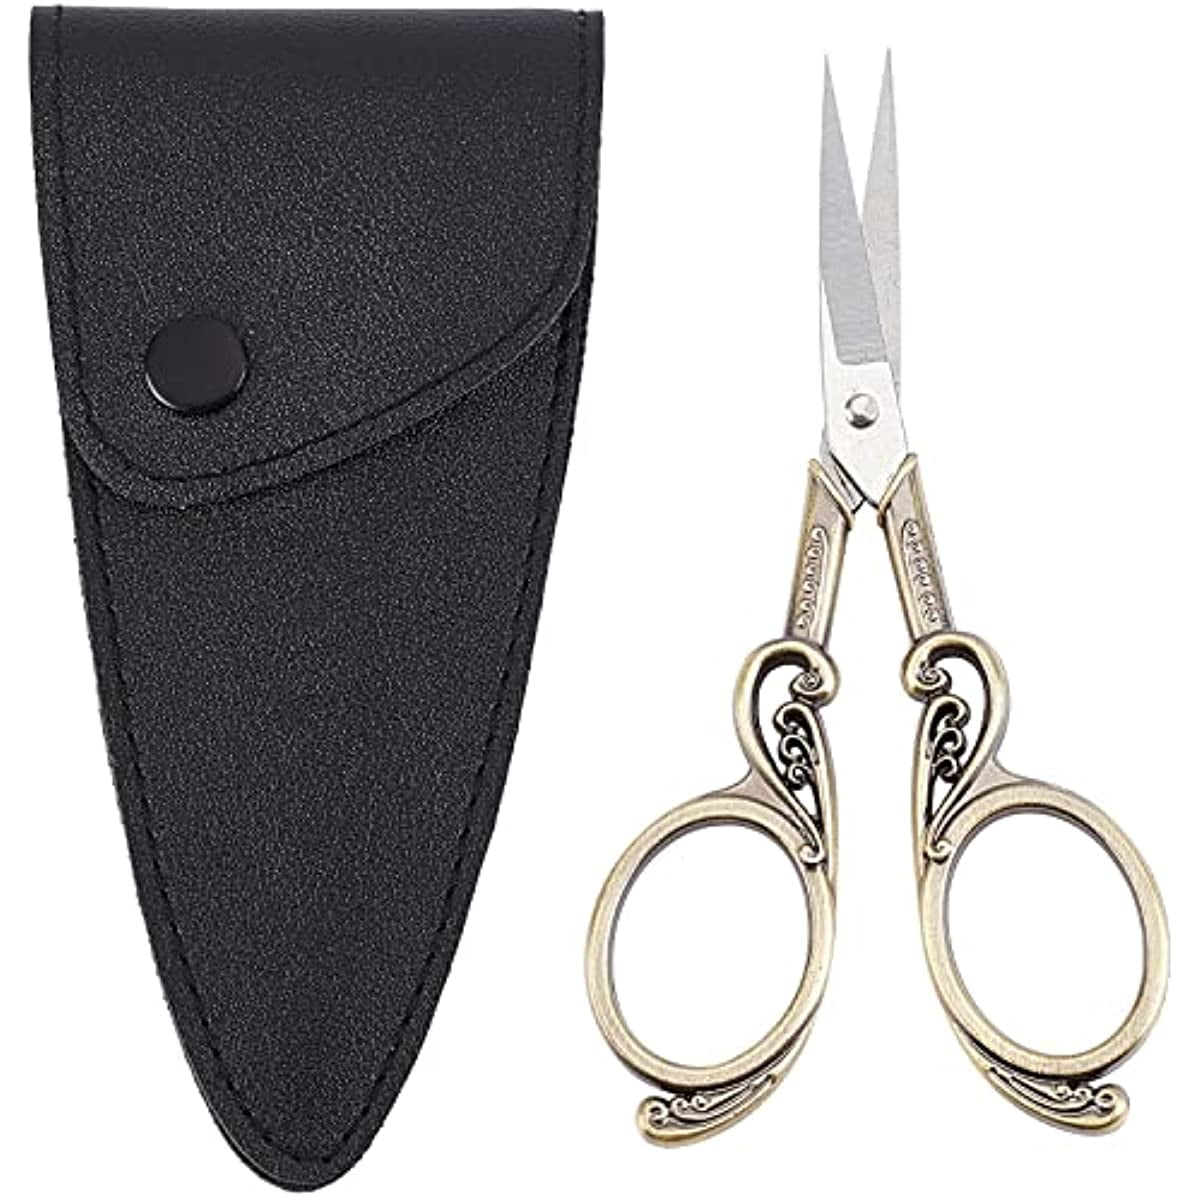 Craft Sewing Scissors, U Shape Scissors Beading Thread Cutter